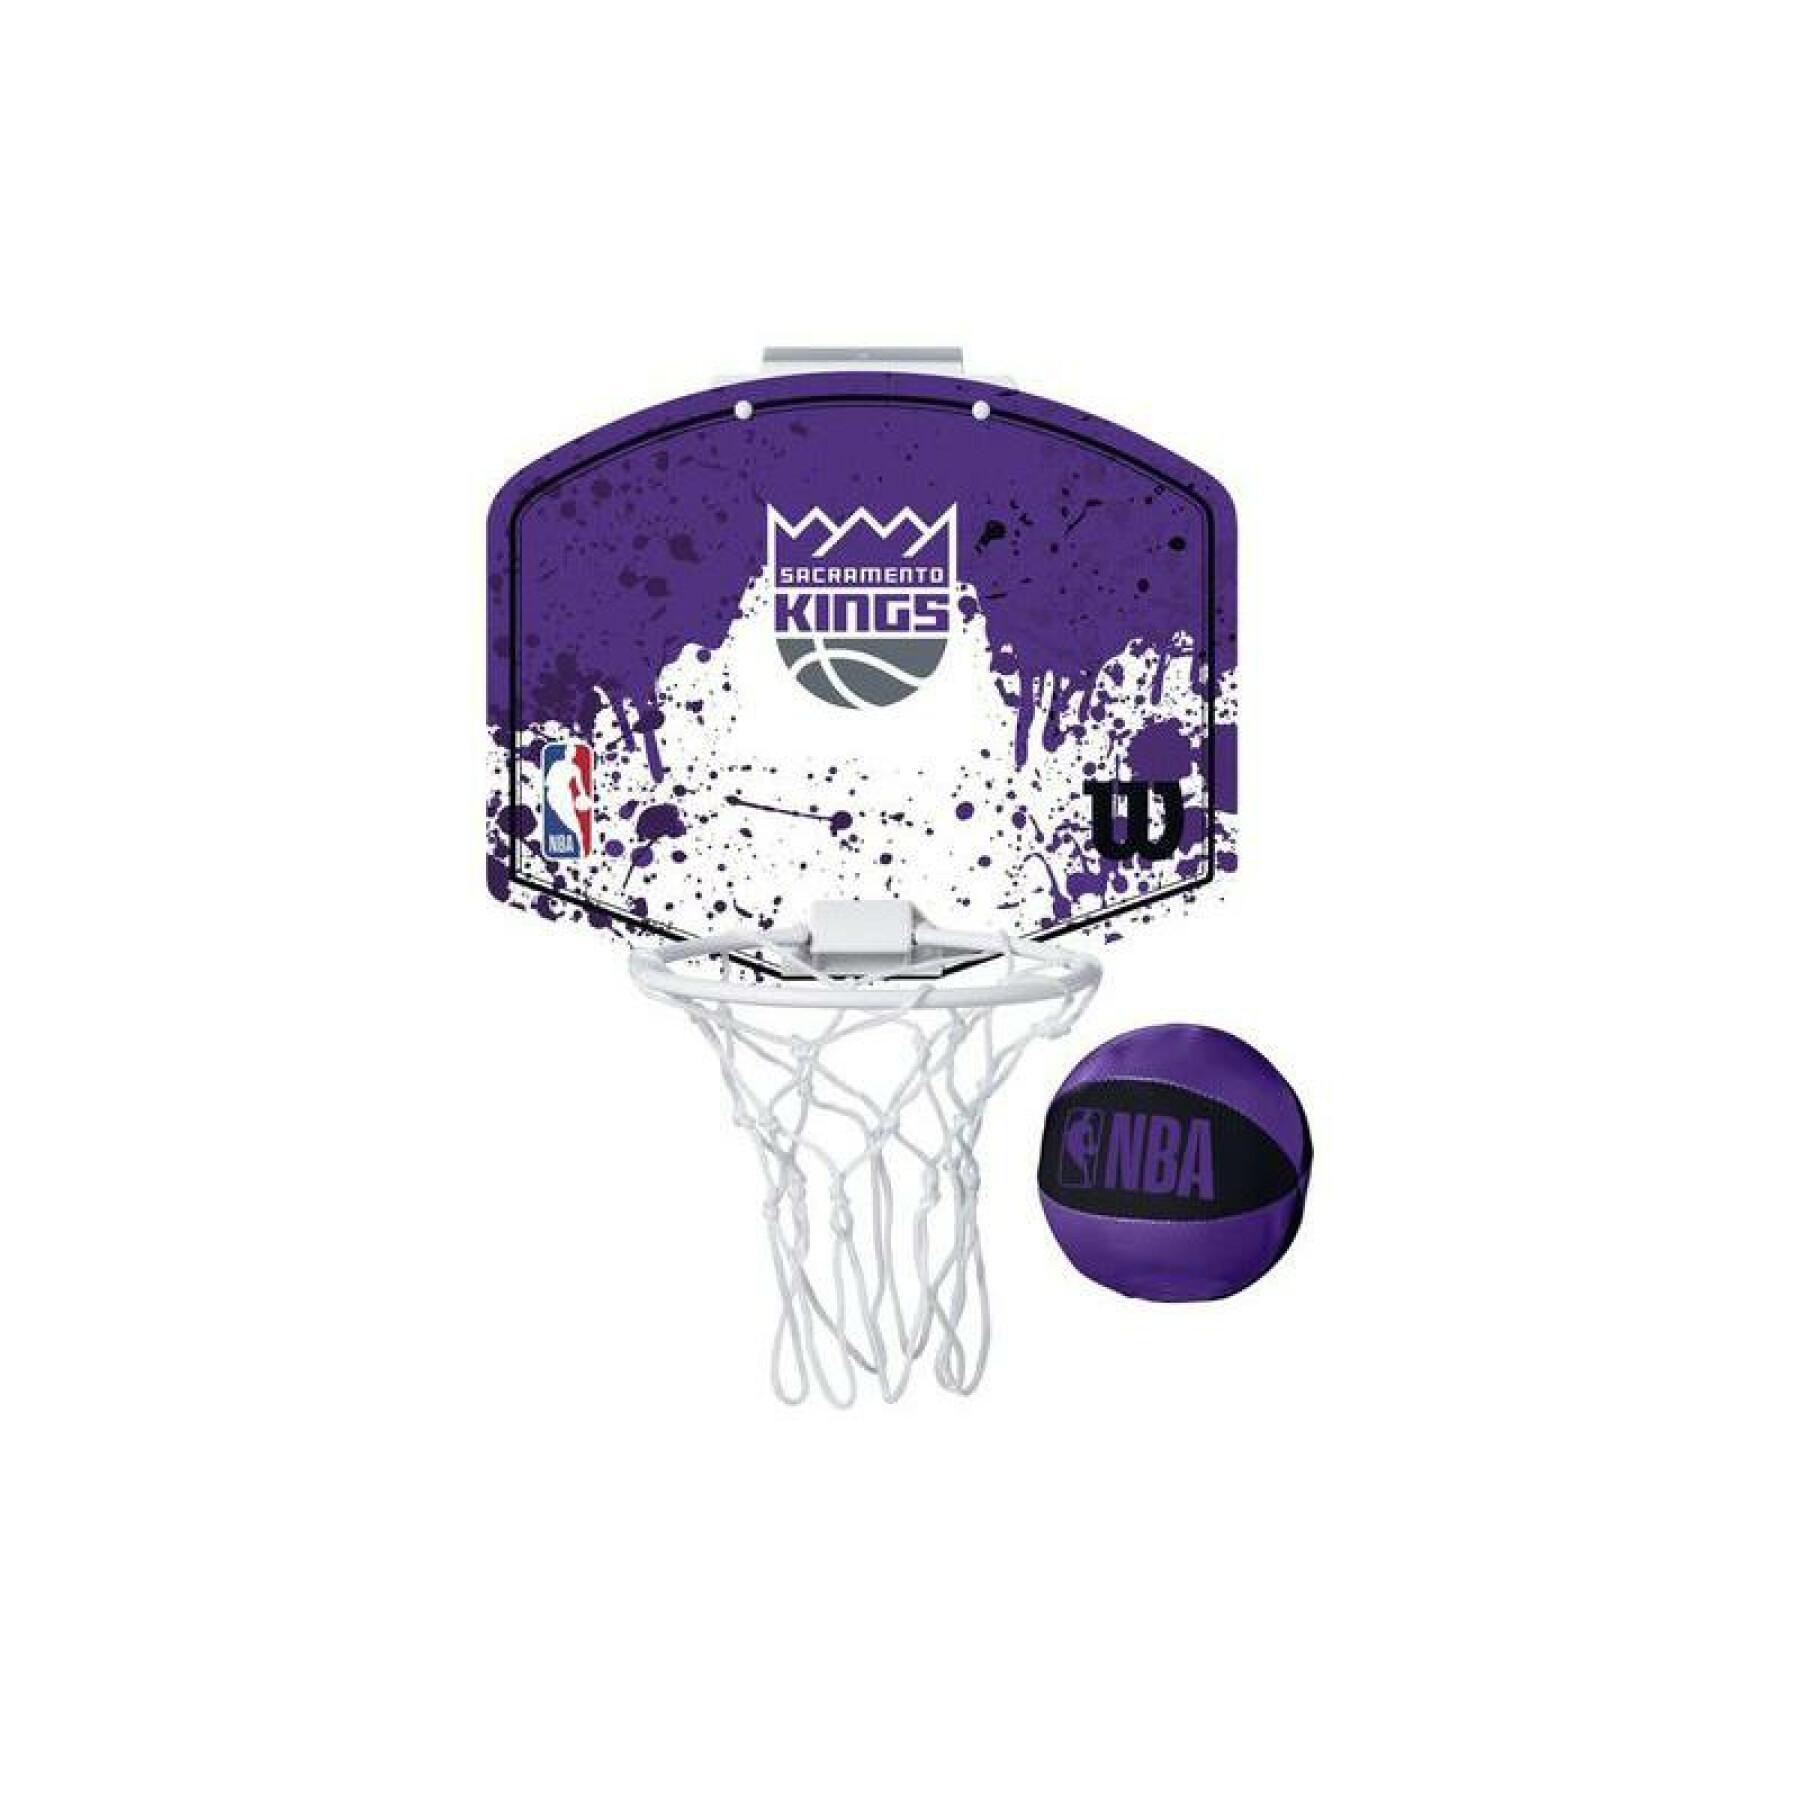 Mini NBA Basketballkorb Sacramento Kings